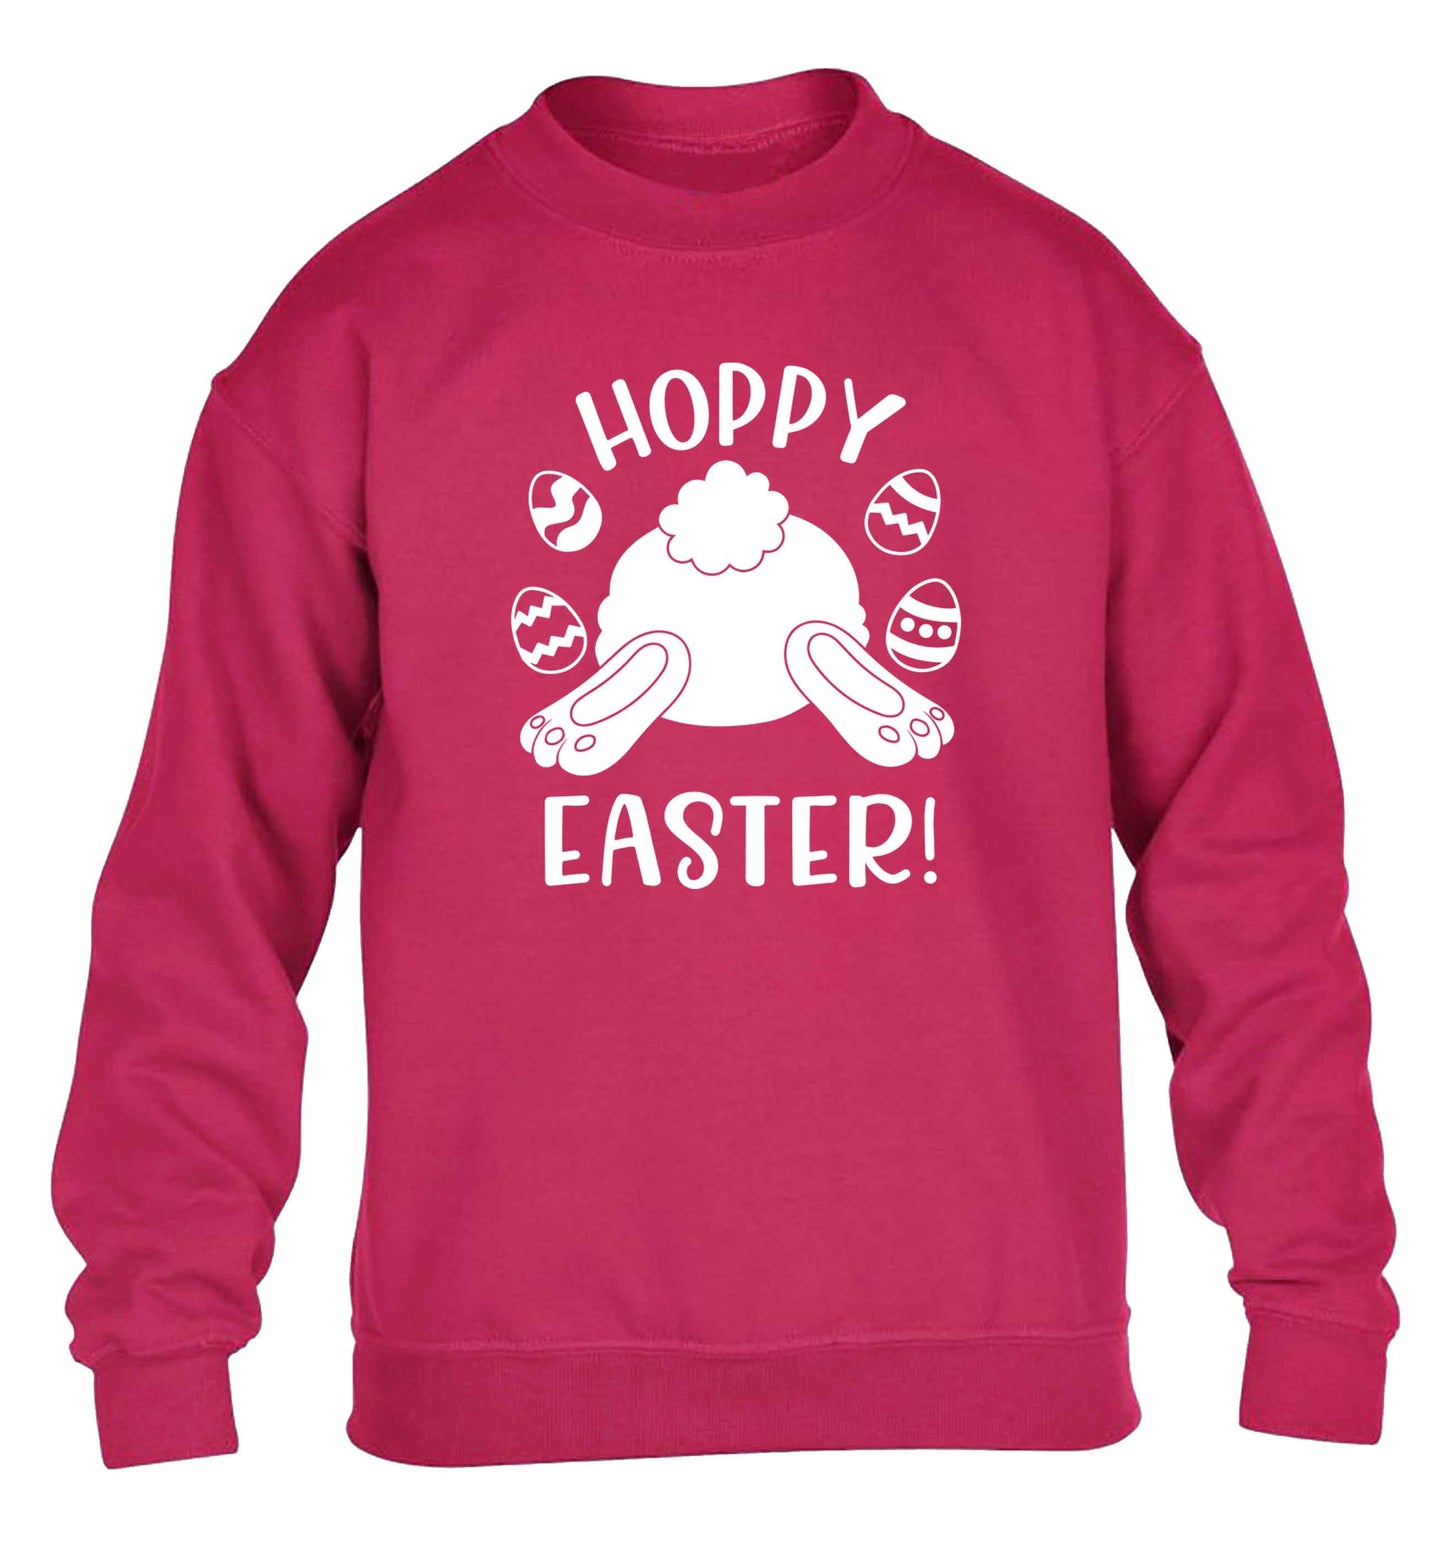 Hoppy Easter children's pink sweater 12-13 Years